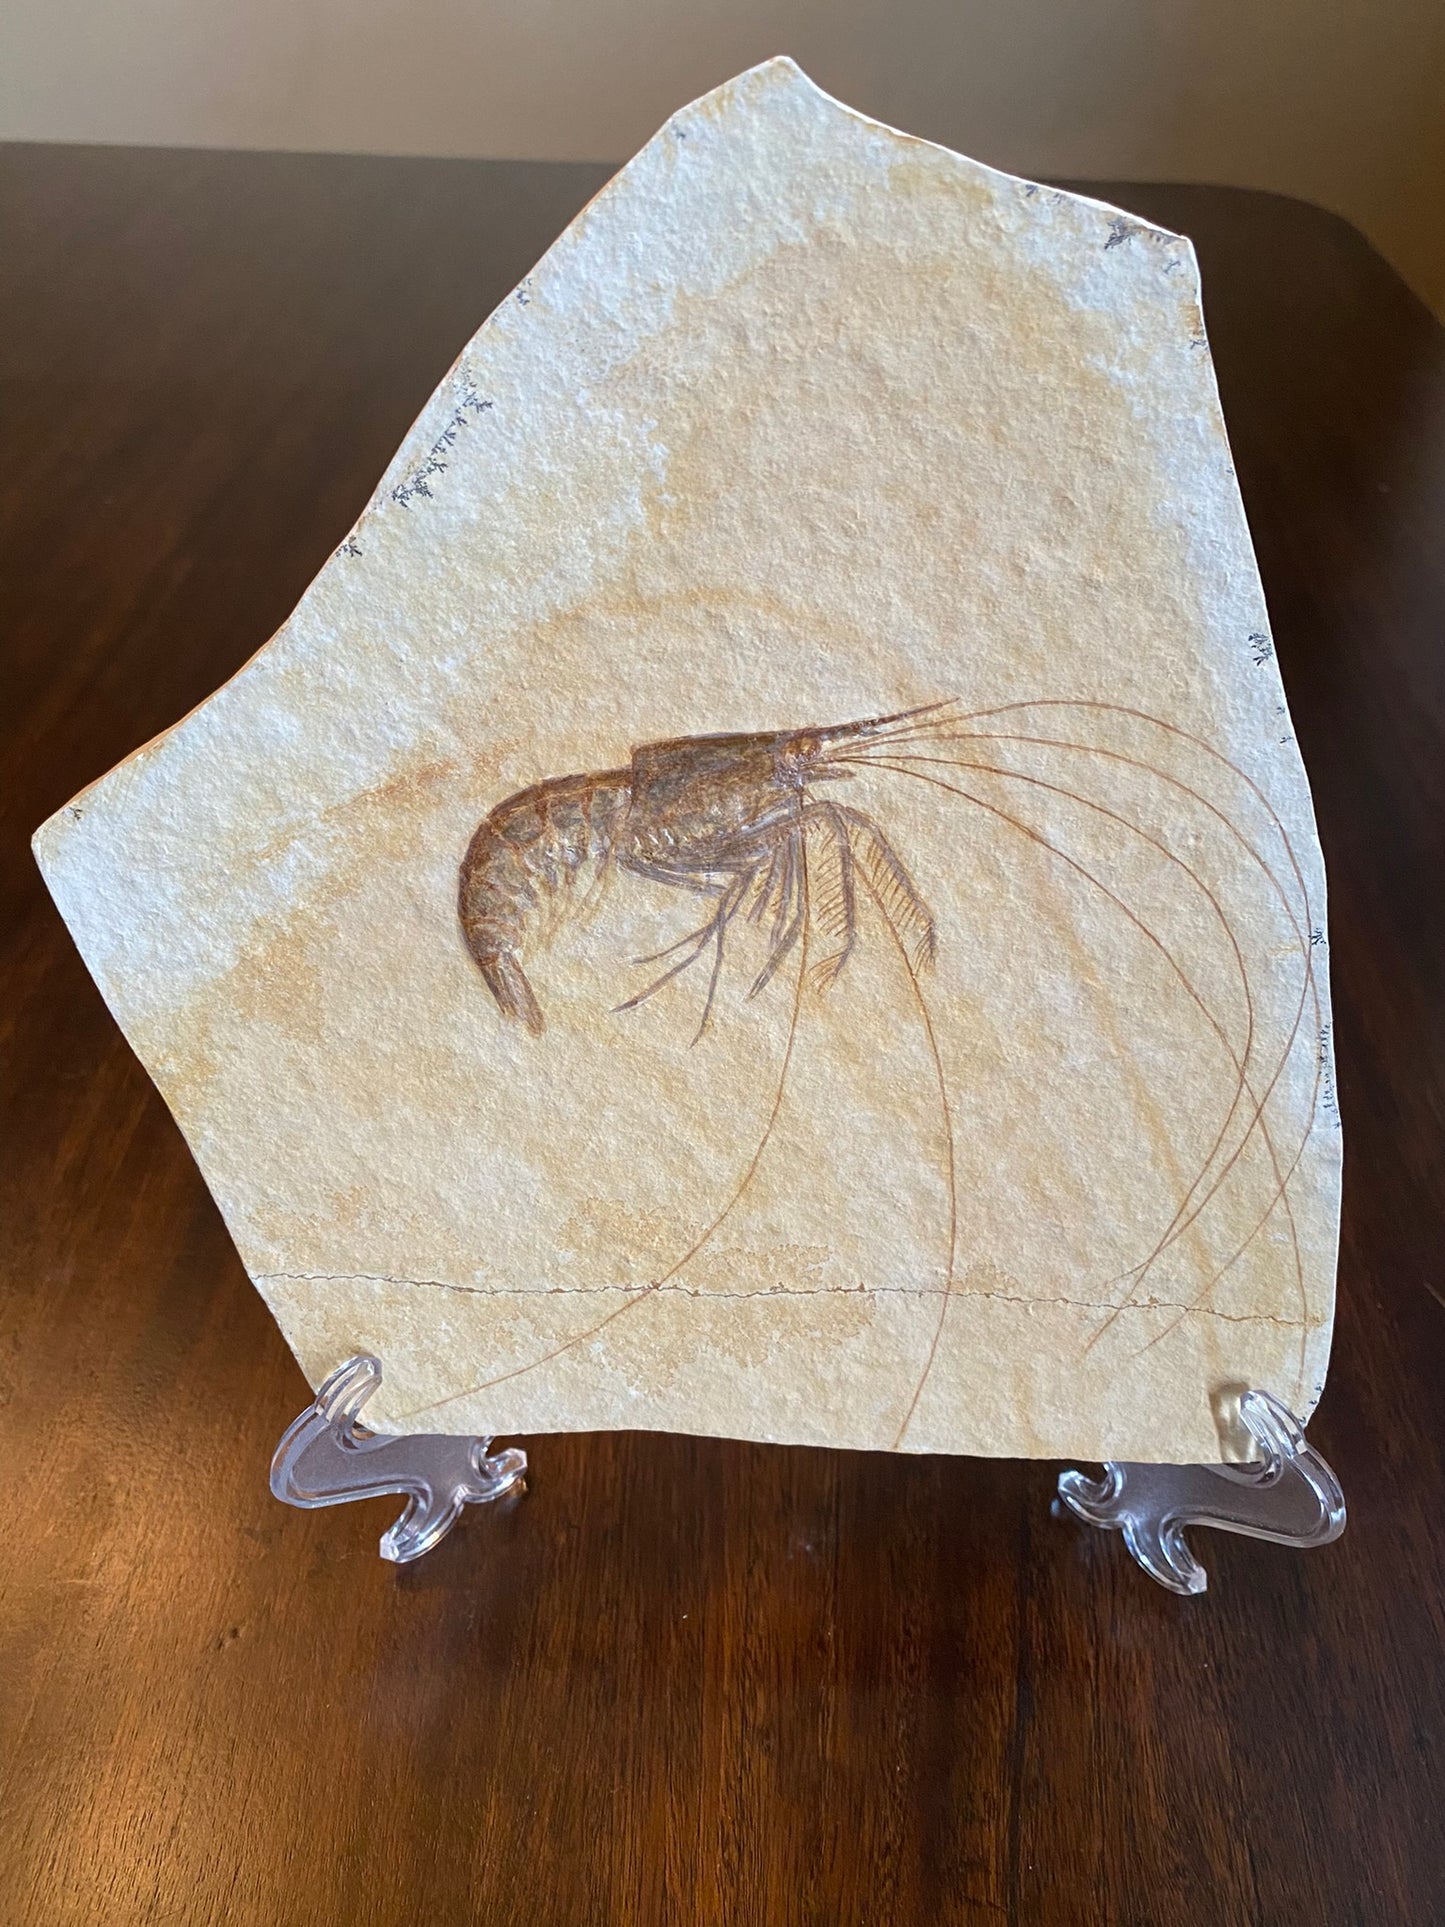 Fossil shrimp (Aeger tipularius), Solnhoften, Germany